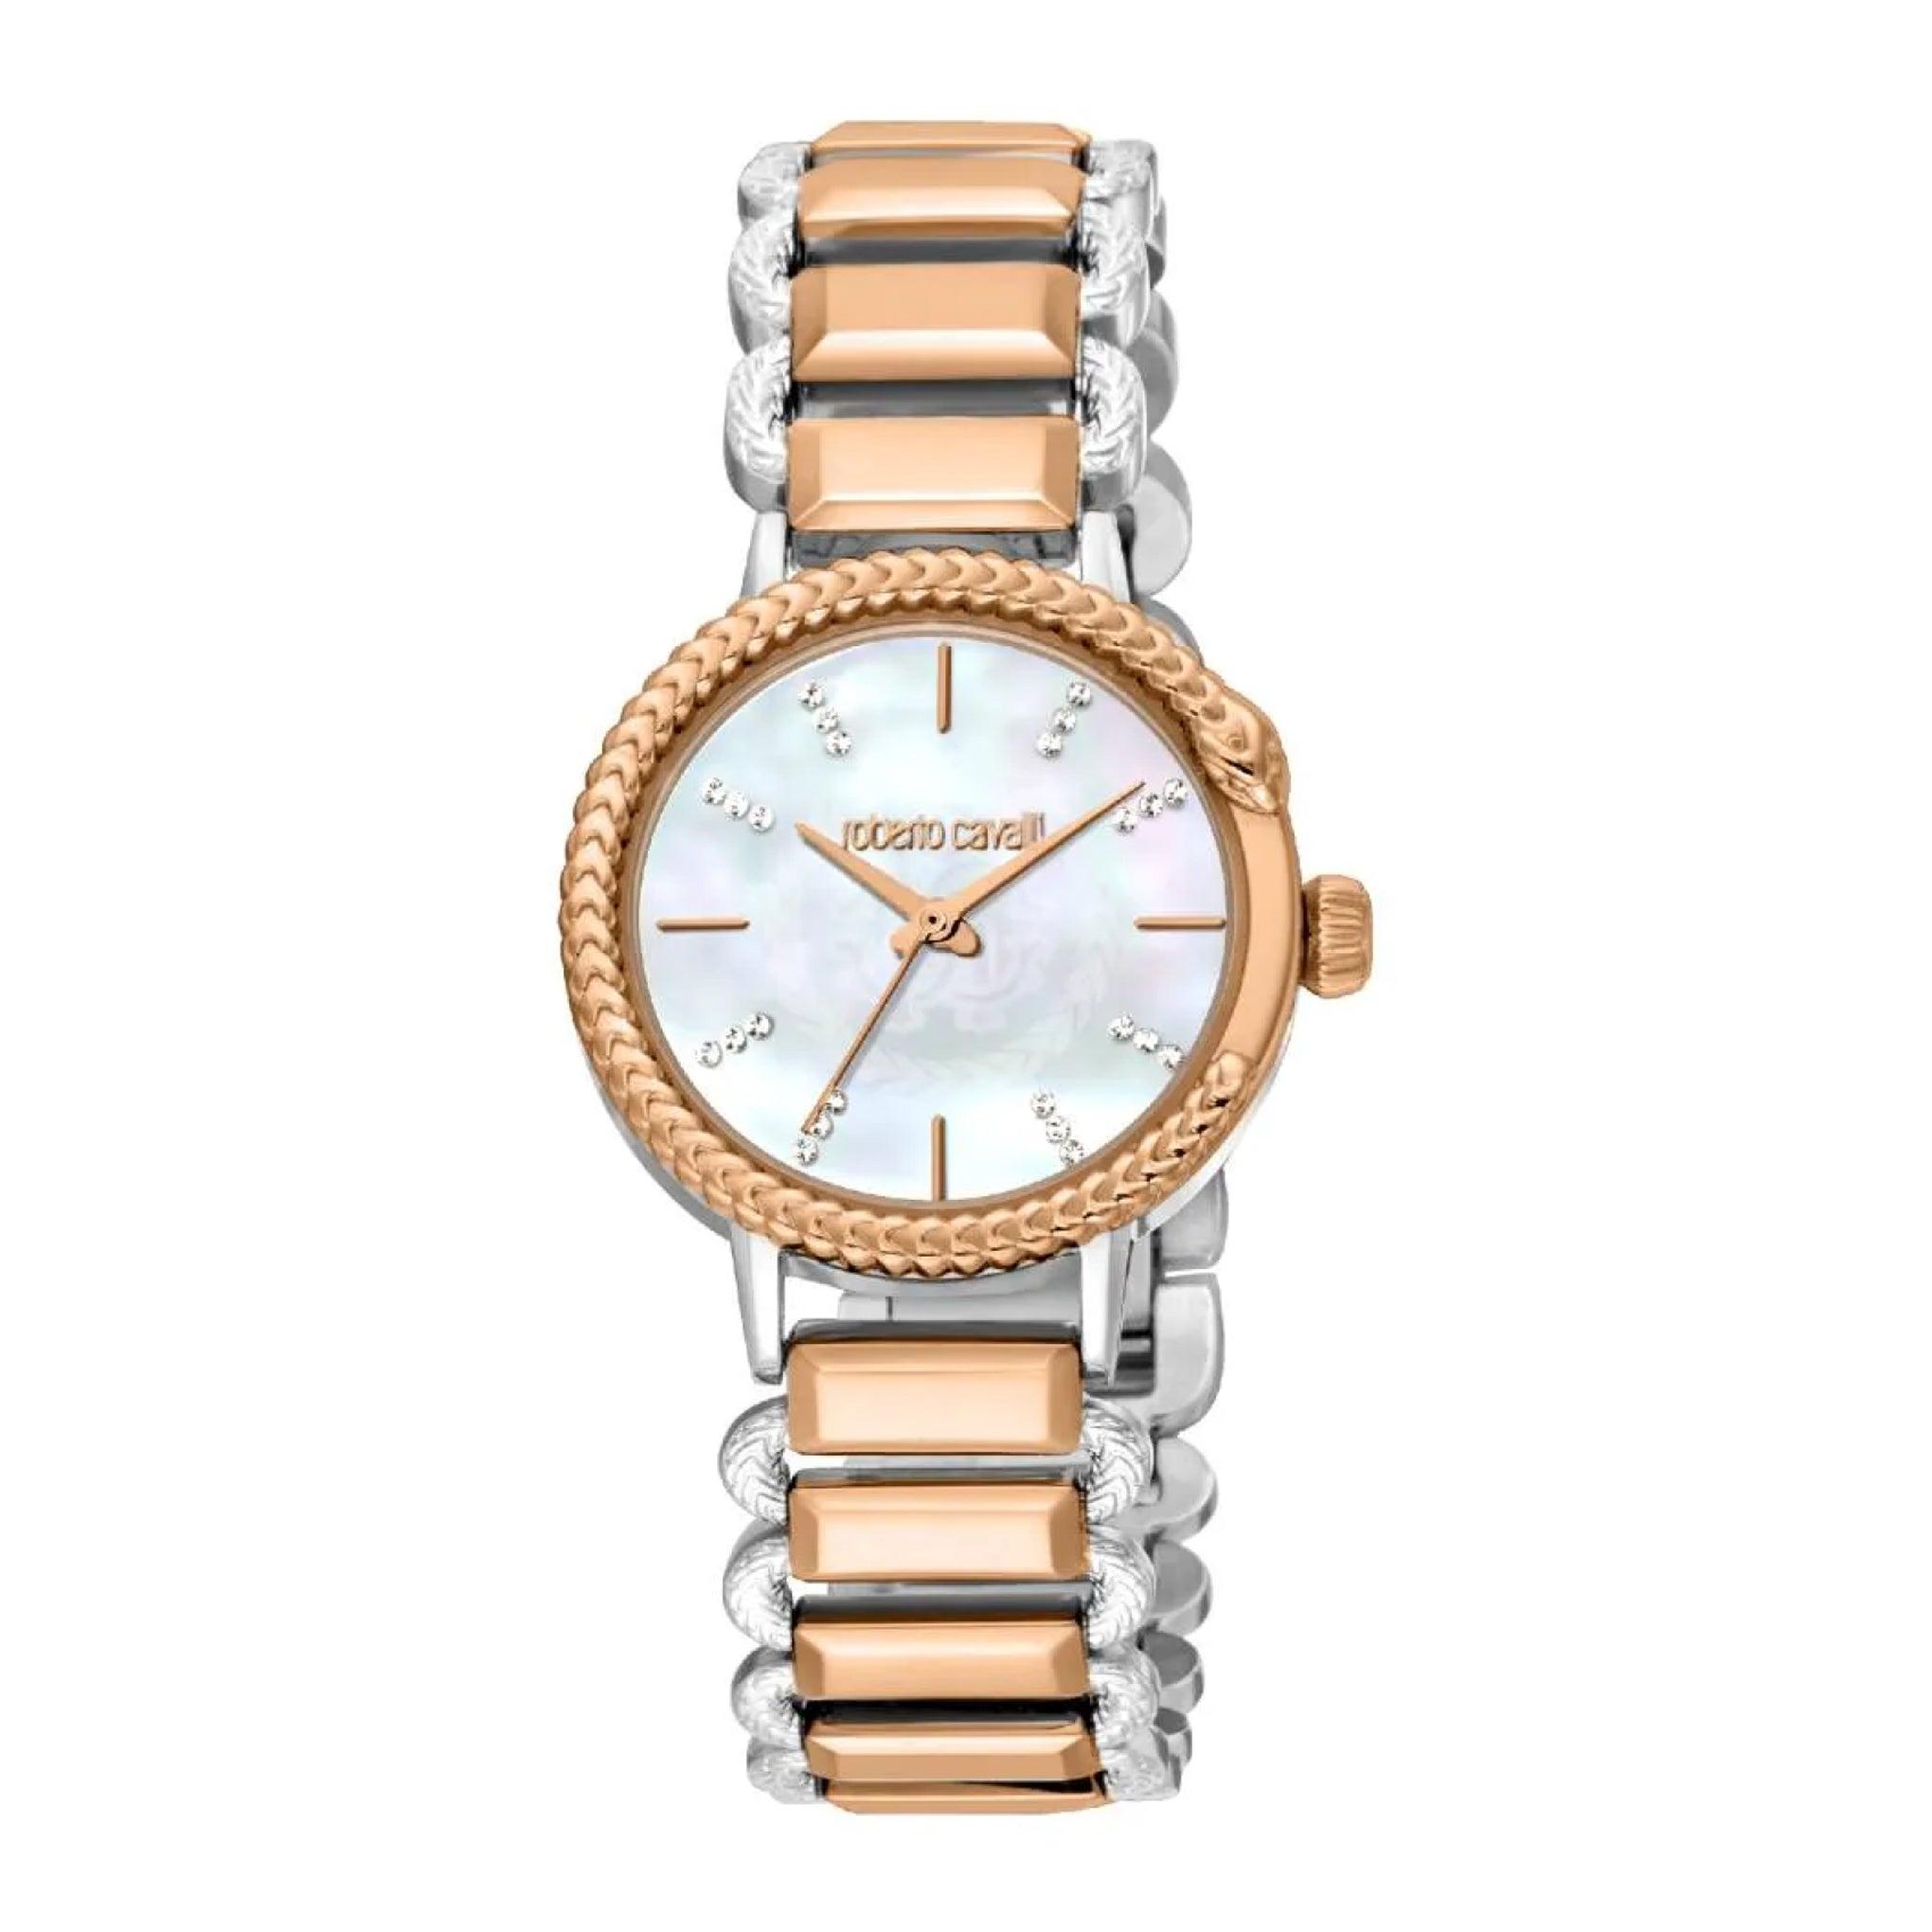 Roberto Cavalli Women's Vista Two Tone Silver & Rose Gold Color Watch Rc5l020m0105